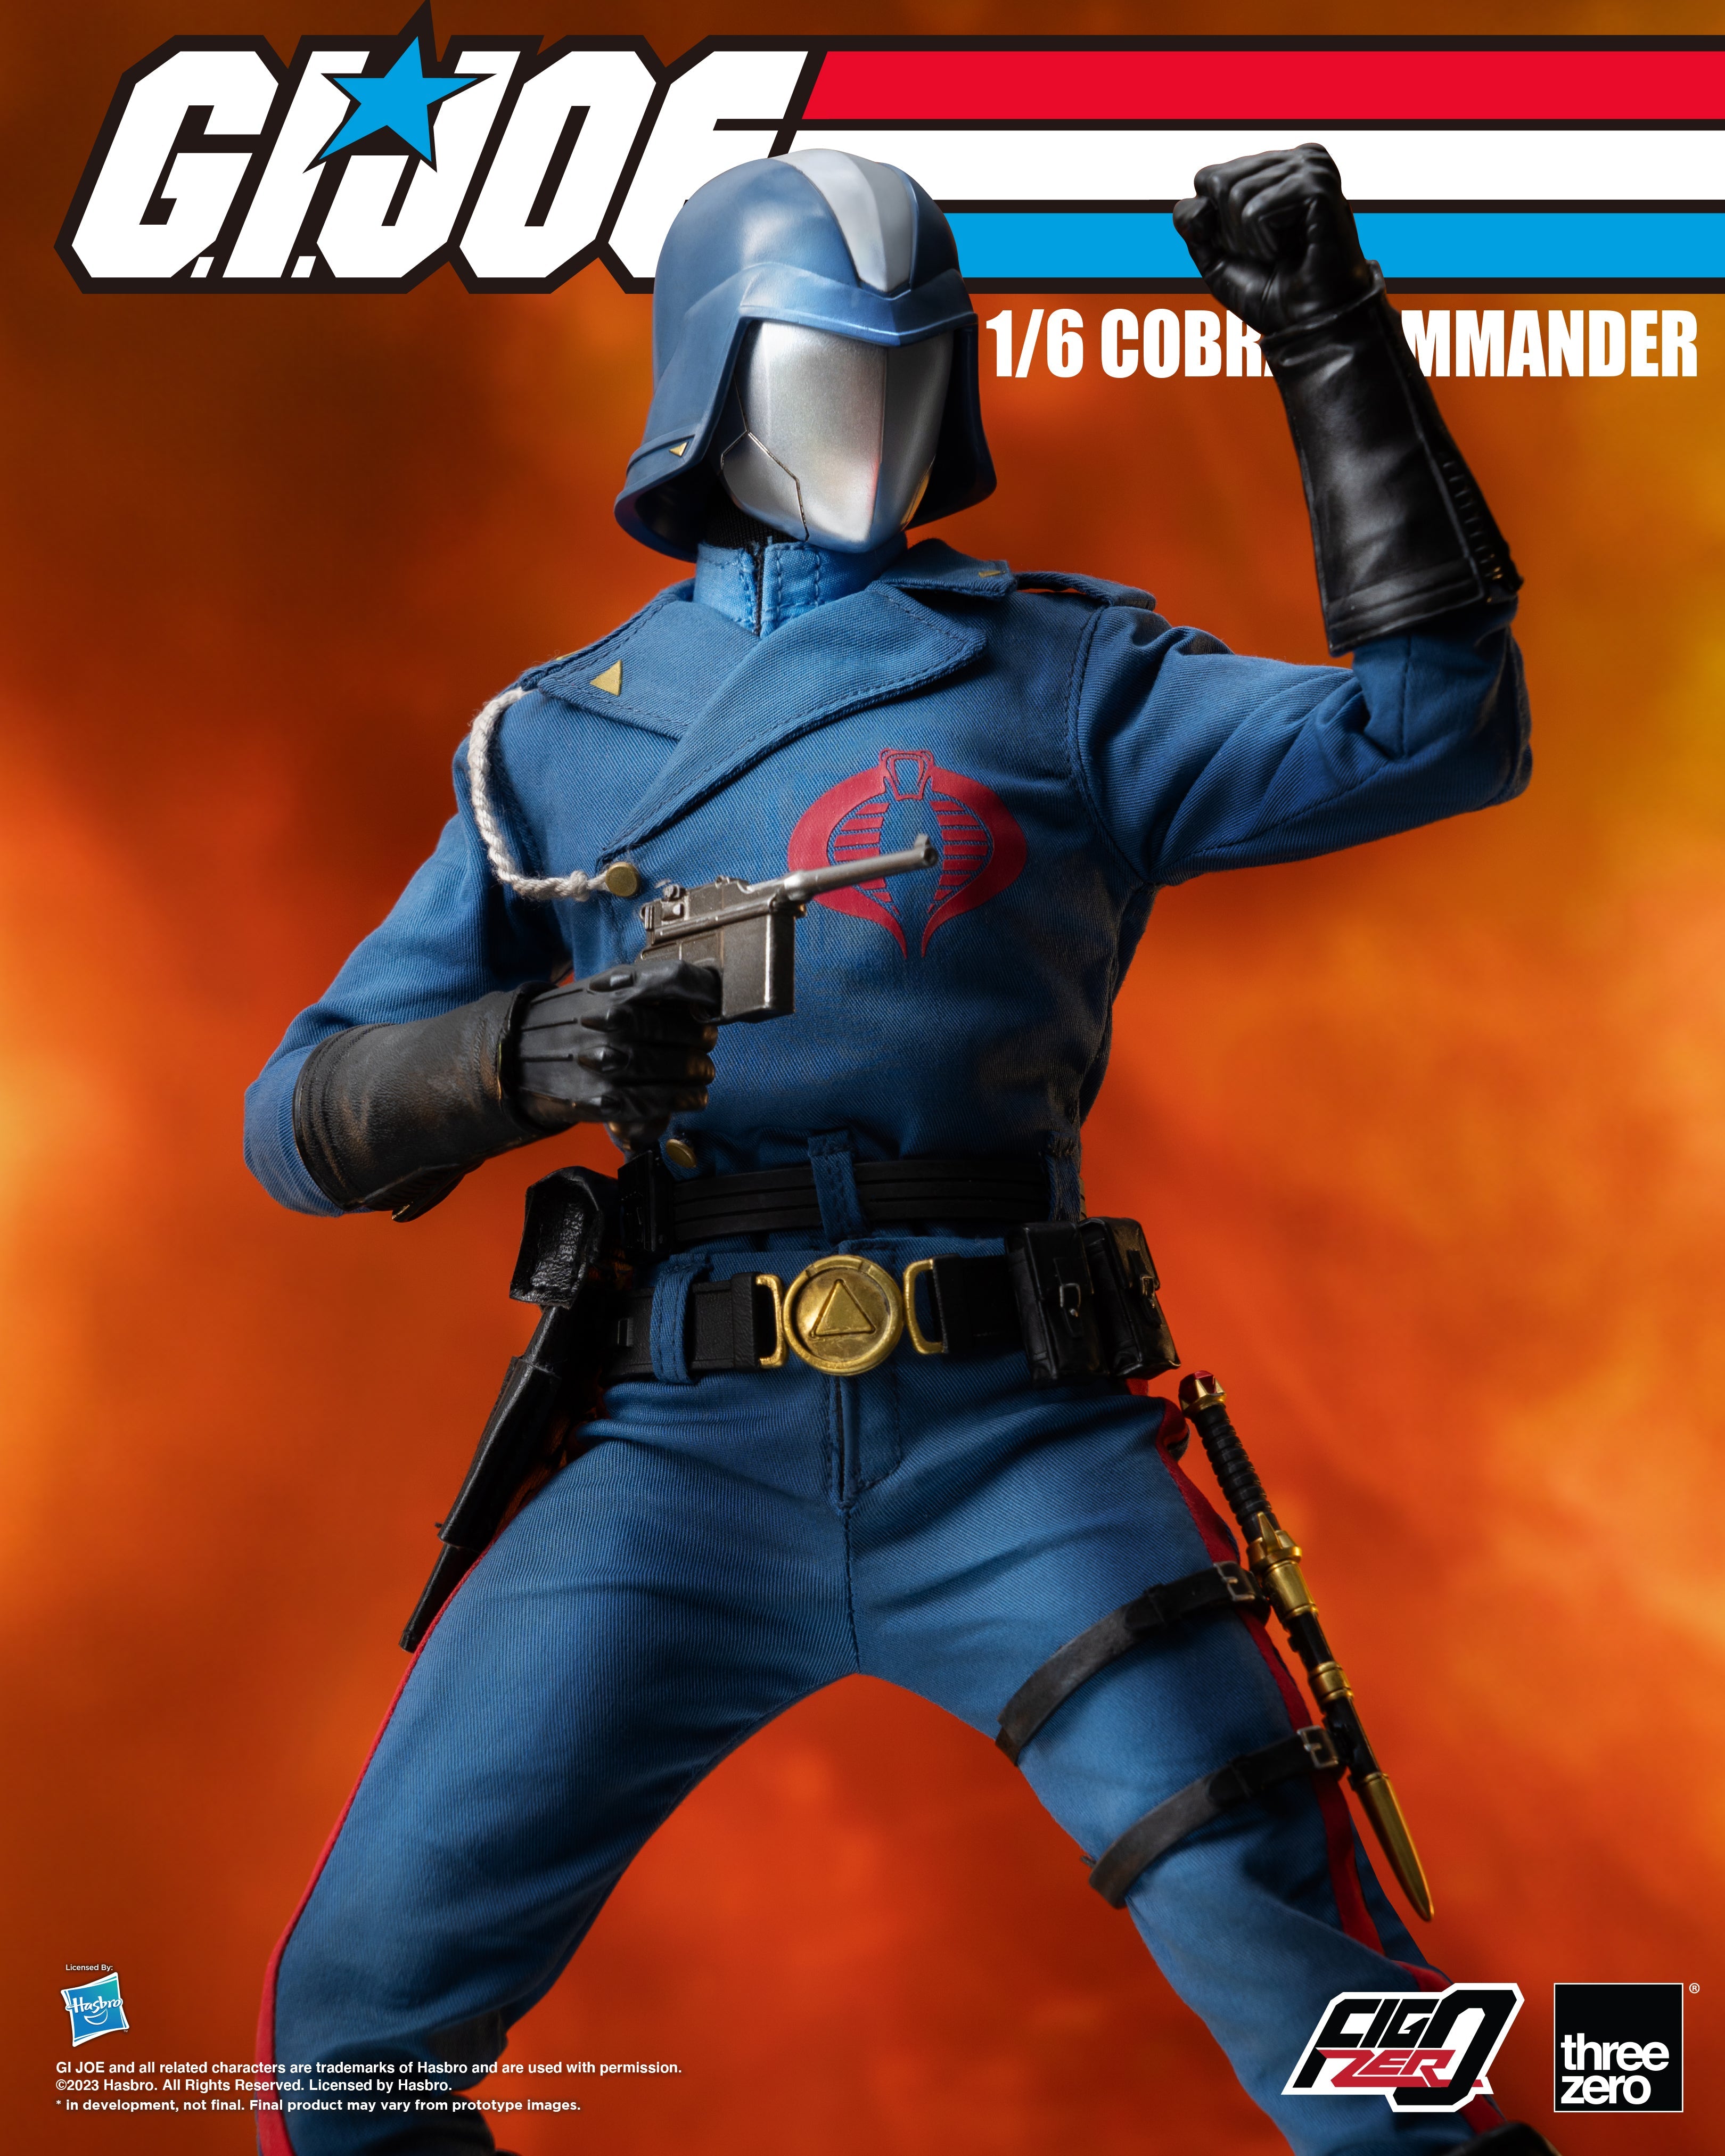 G.I Joe: Cobra Commander ThreeZero